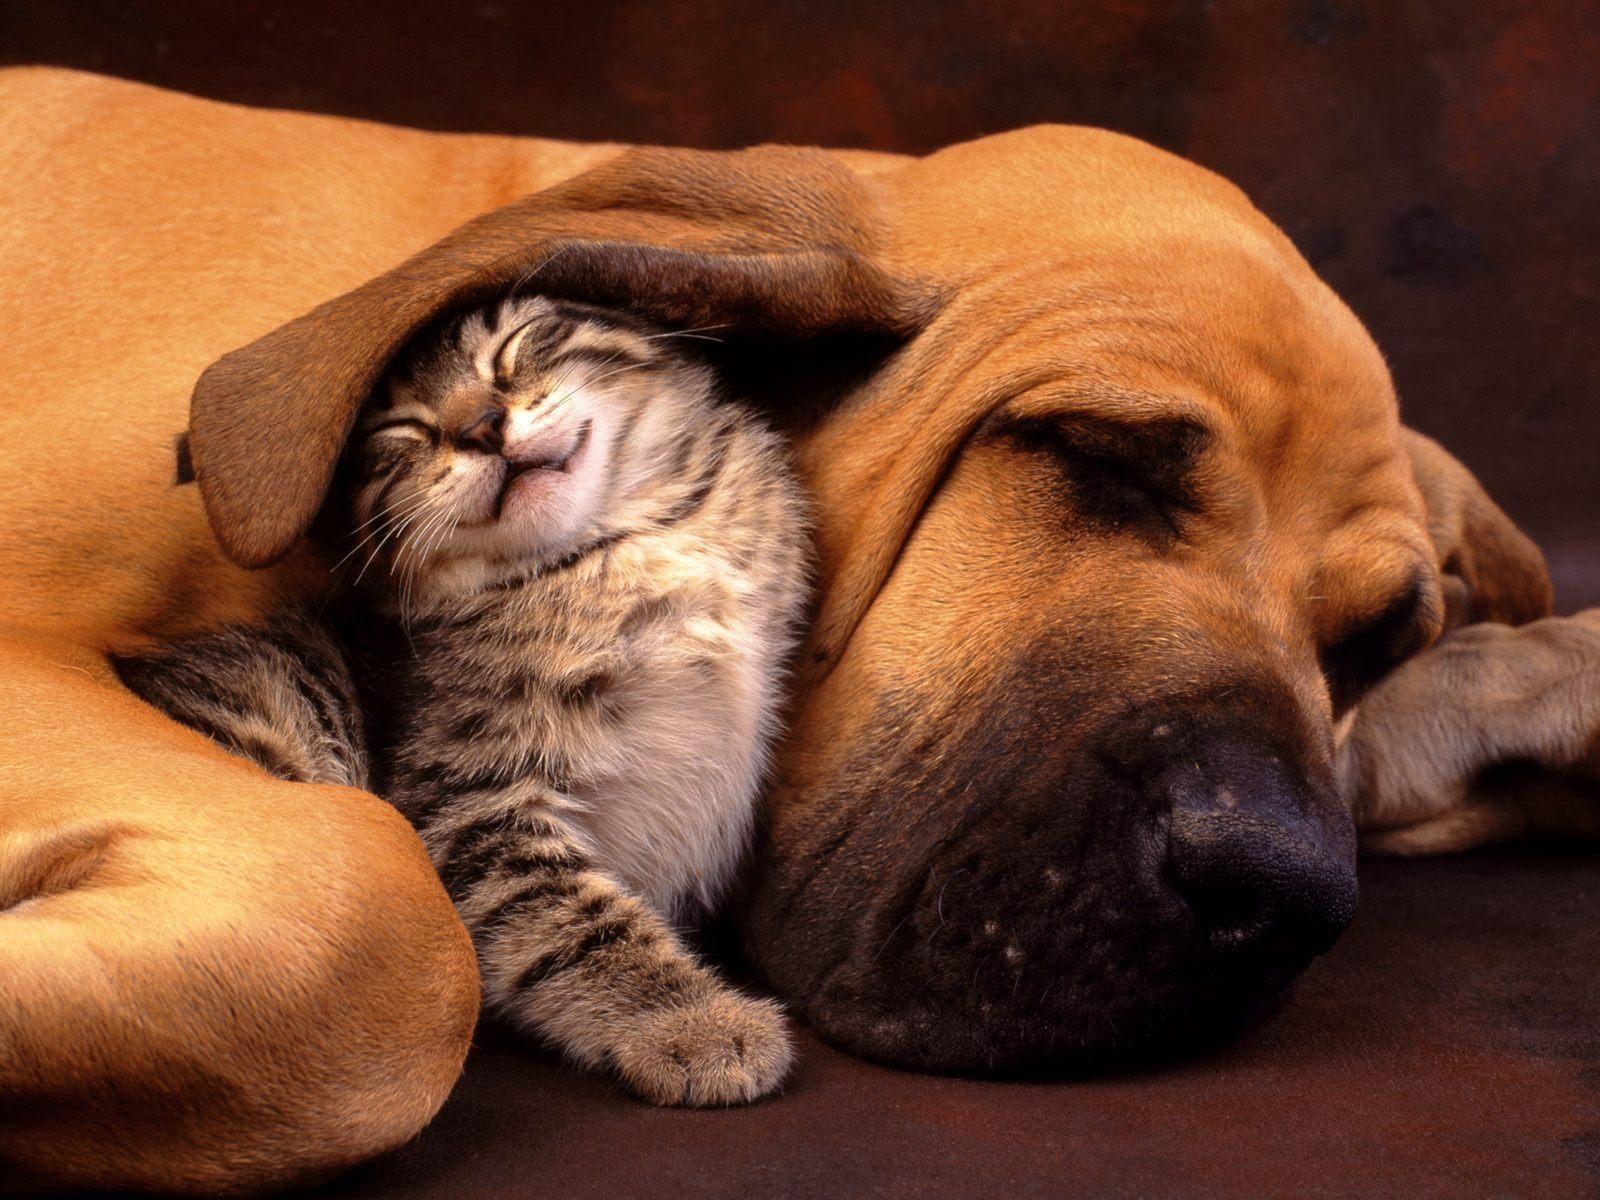 Good friends Dog & Cat wallpaper wallpaper, download